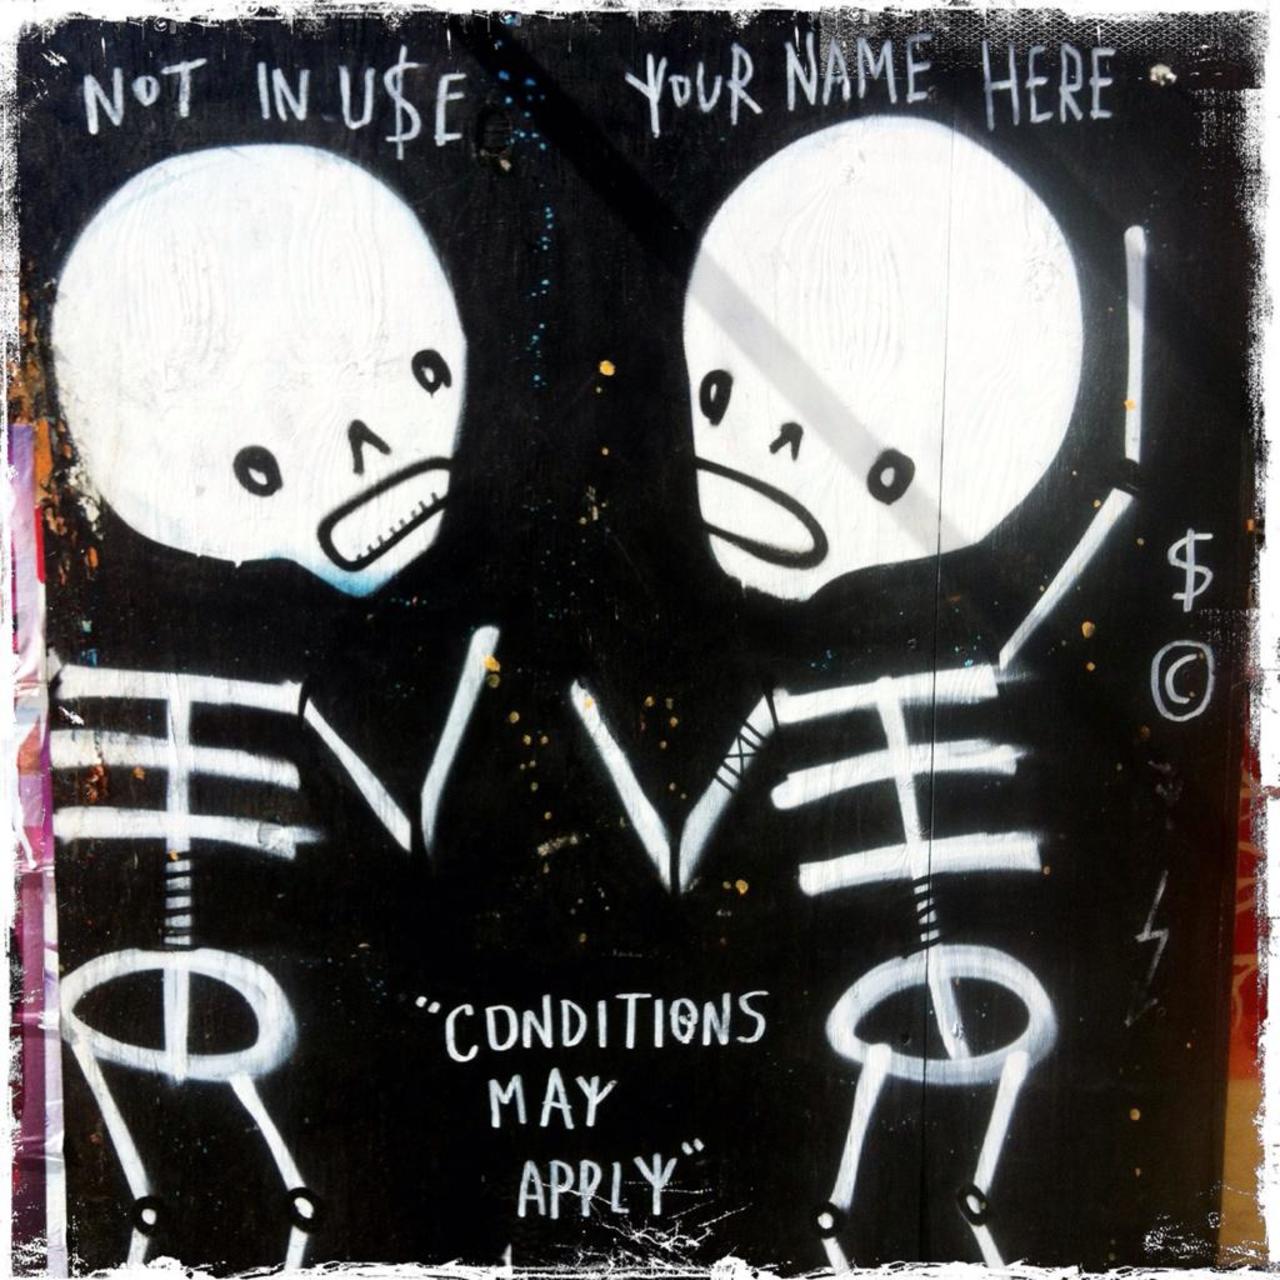 Skeleton Cardboard on Hackney Road #art #streetart #graffiti http://t.co/DUNQ4tQLMA